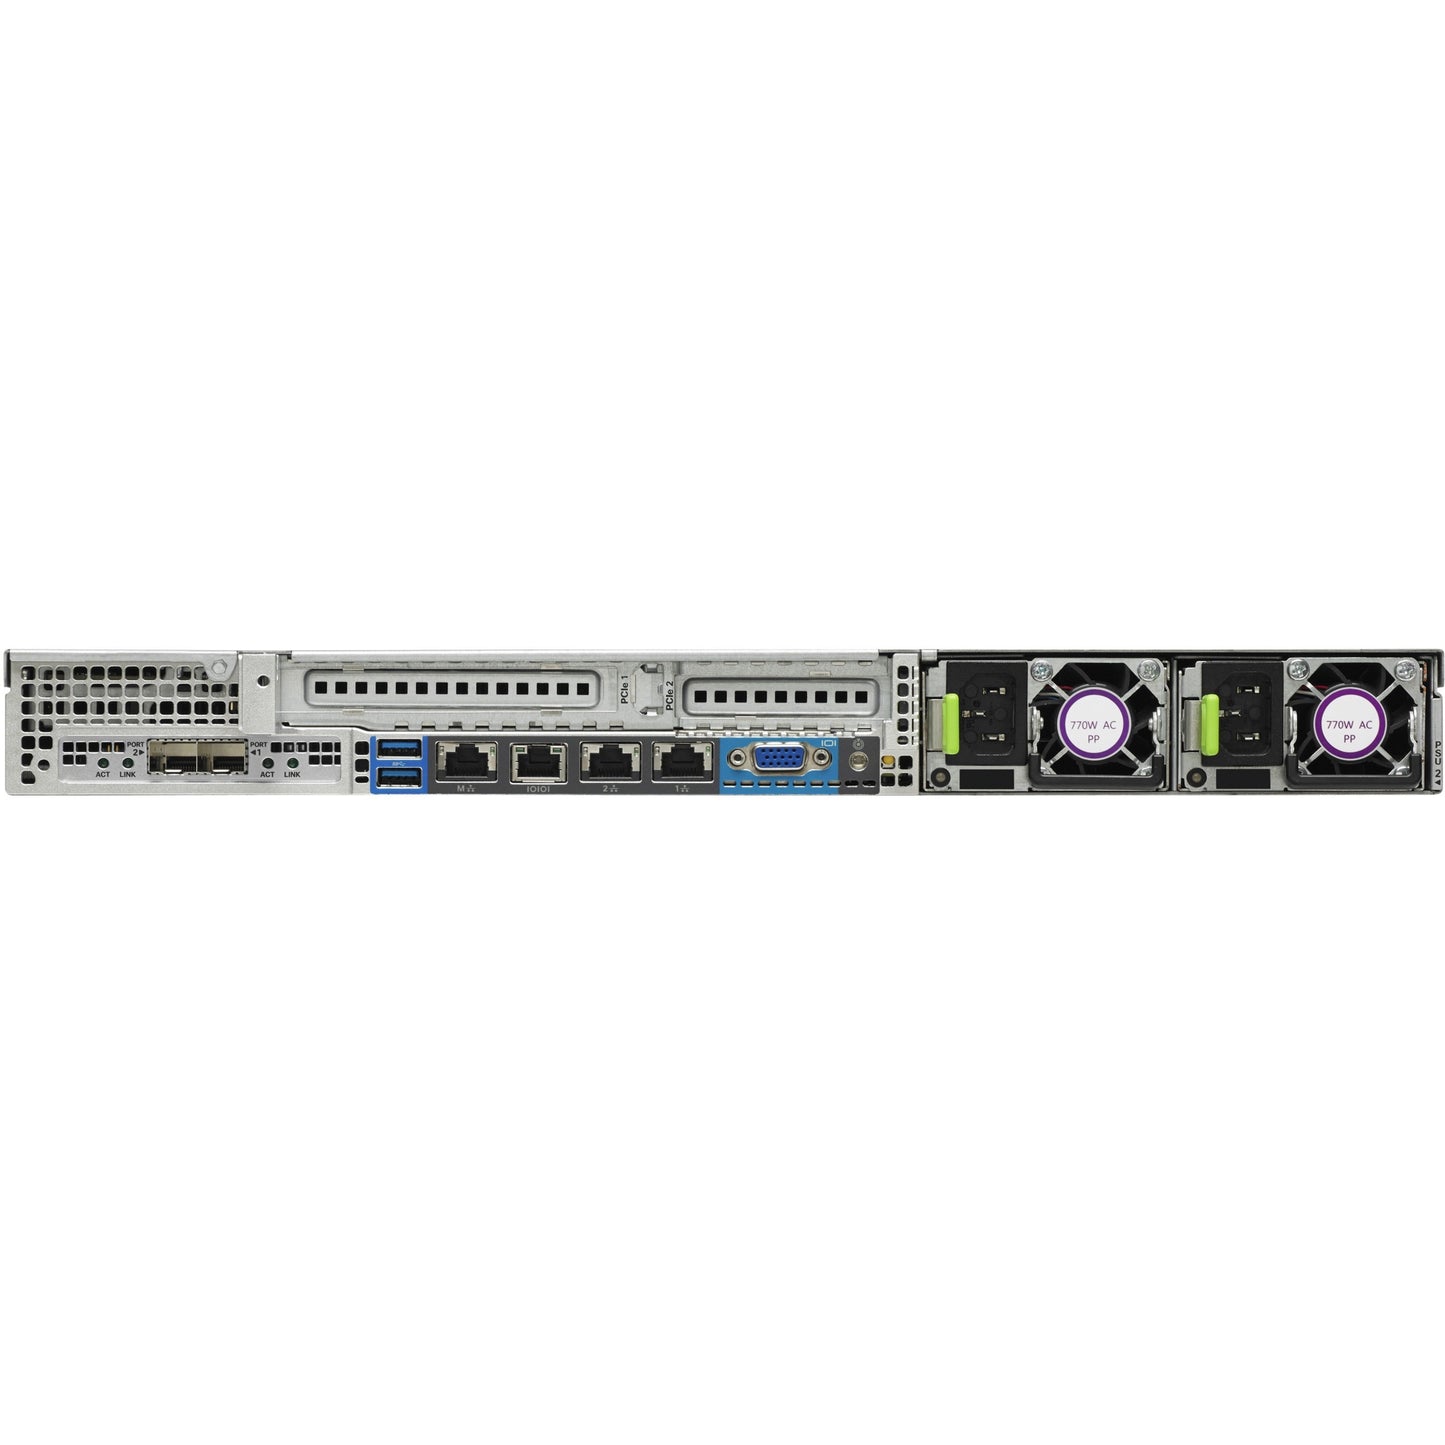 Cisco C220 M4 Rack Server - 2 x Intel Xeon E5-2609 v3 1.90 GHz - 64 GB RAM - 12Gb/s SAS Serial ATA Controller